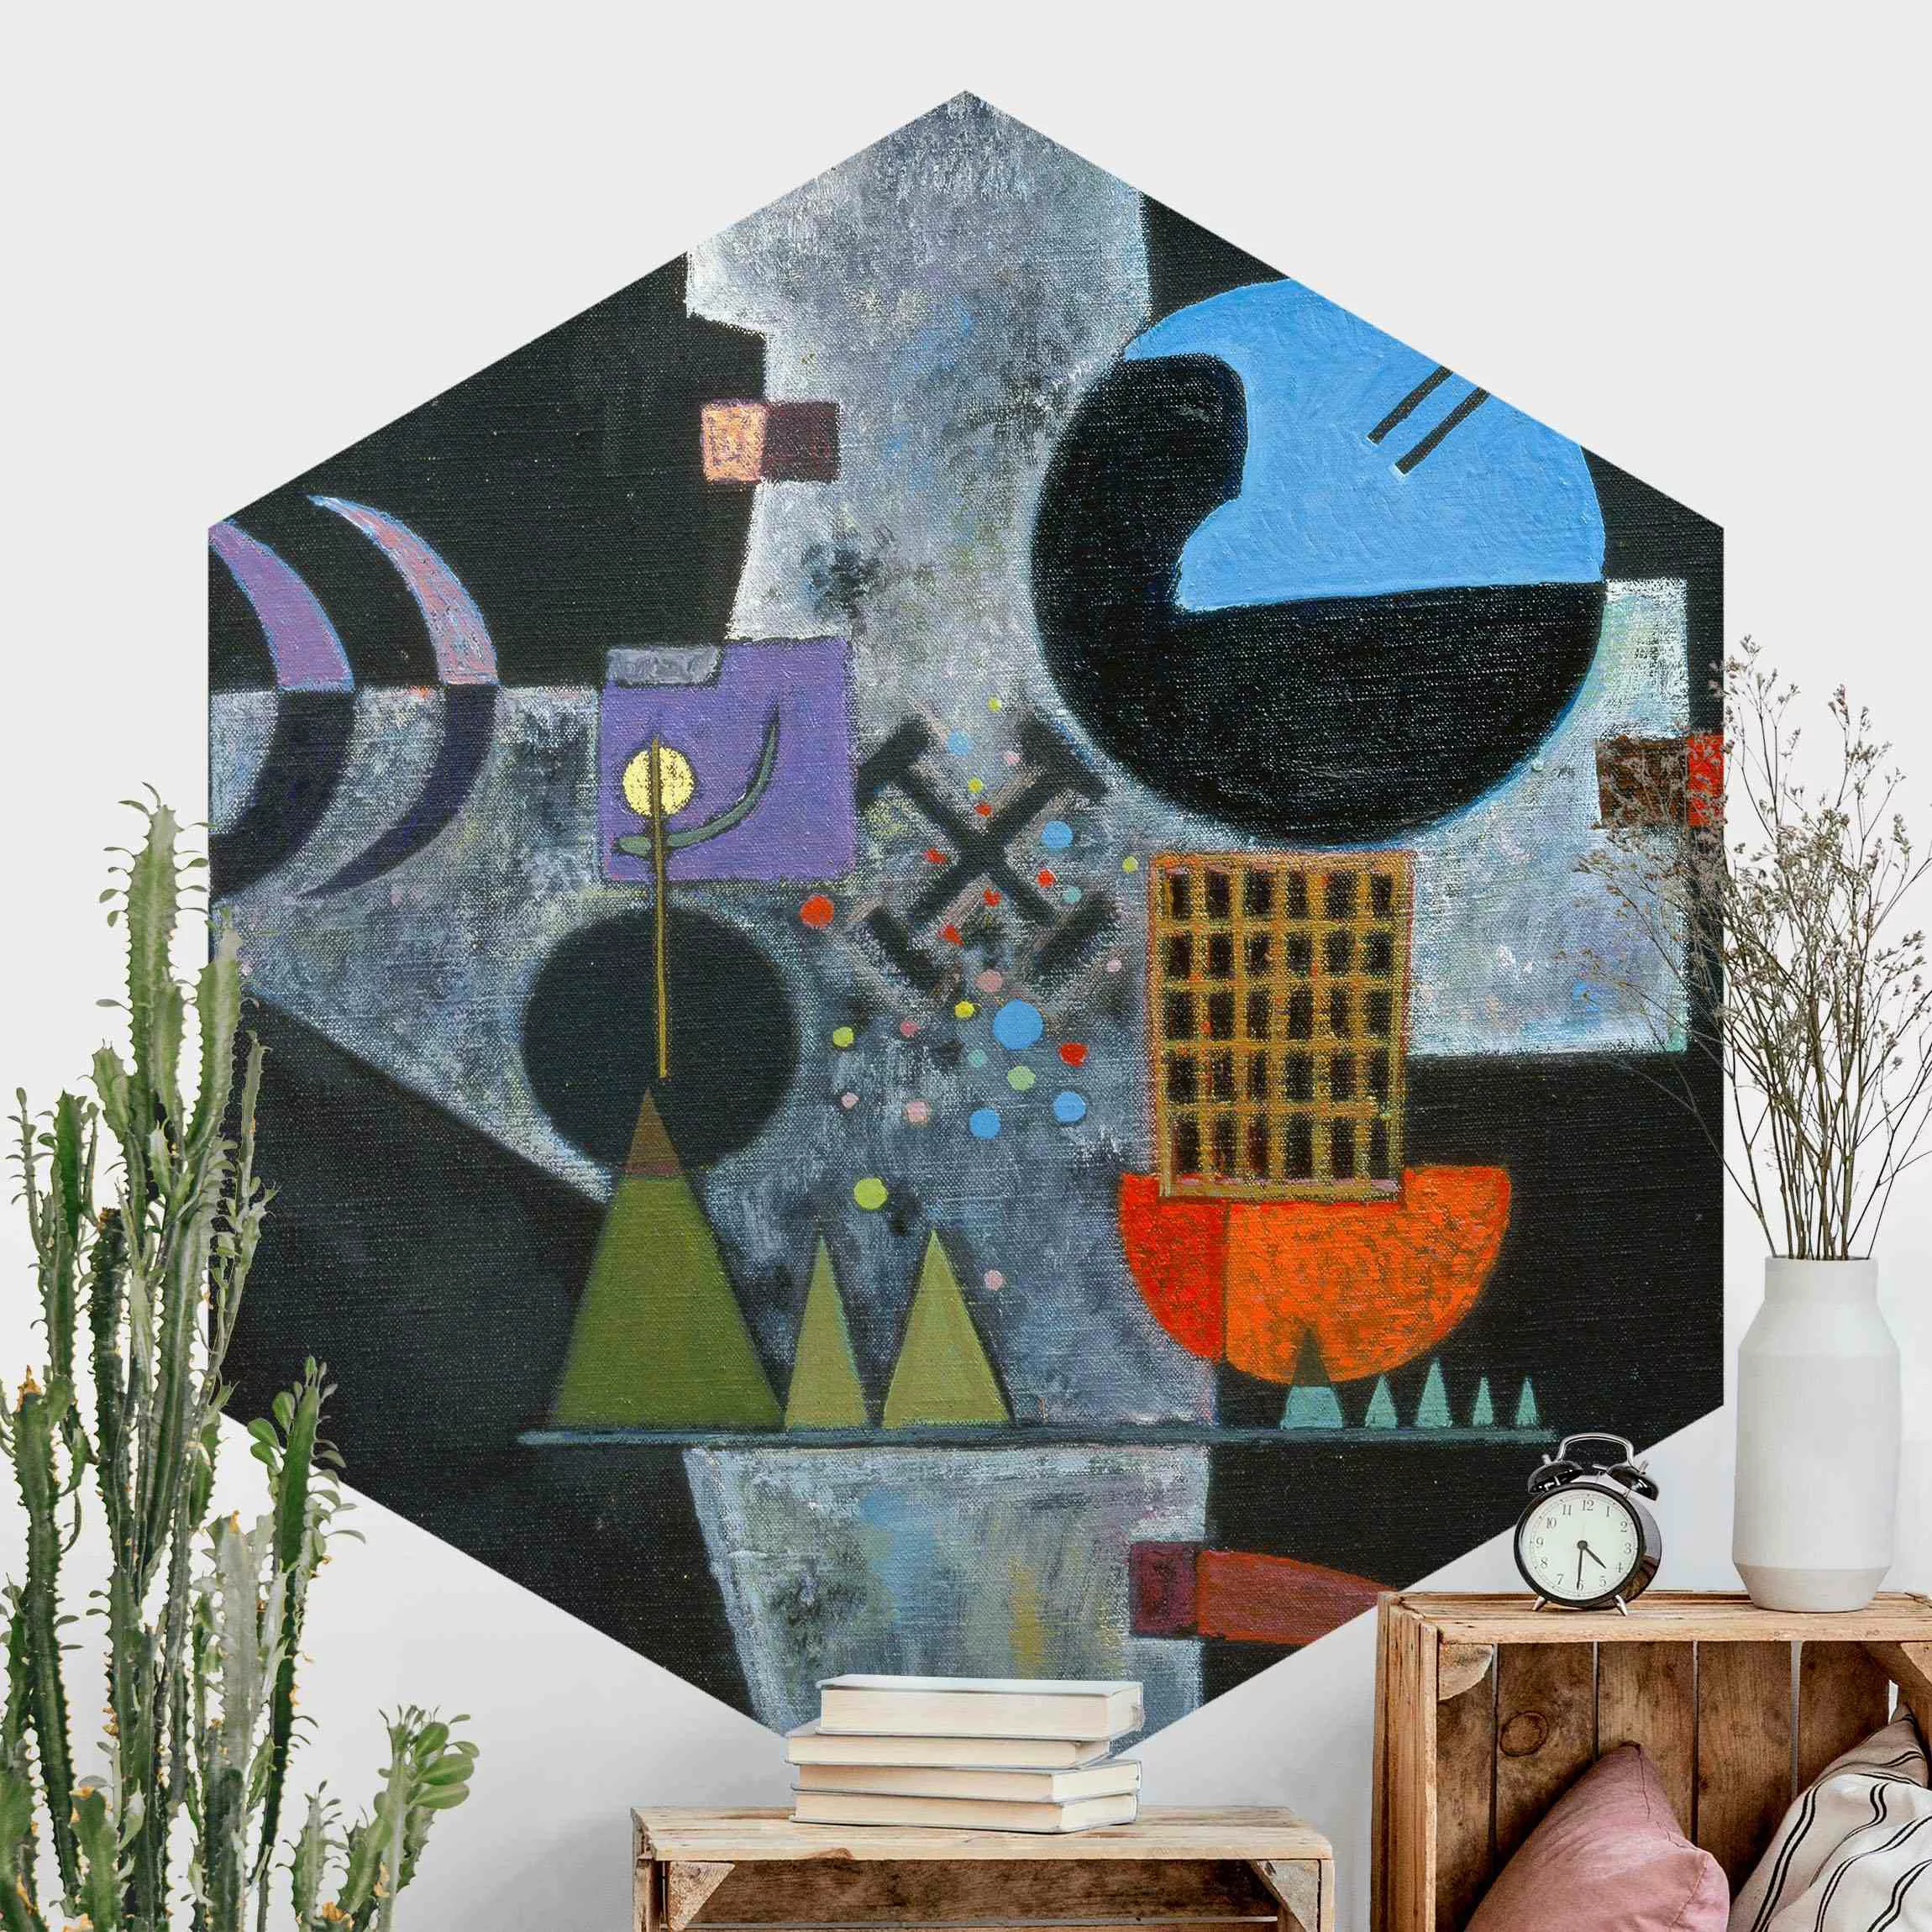 Hexagon Fototapete selbstklebend Wassily Kandinsky - Kreuzform günstig online kaufen